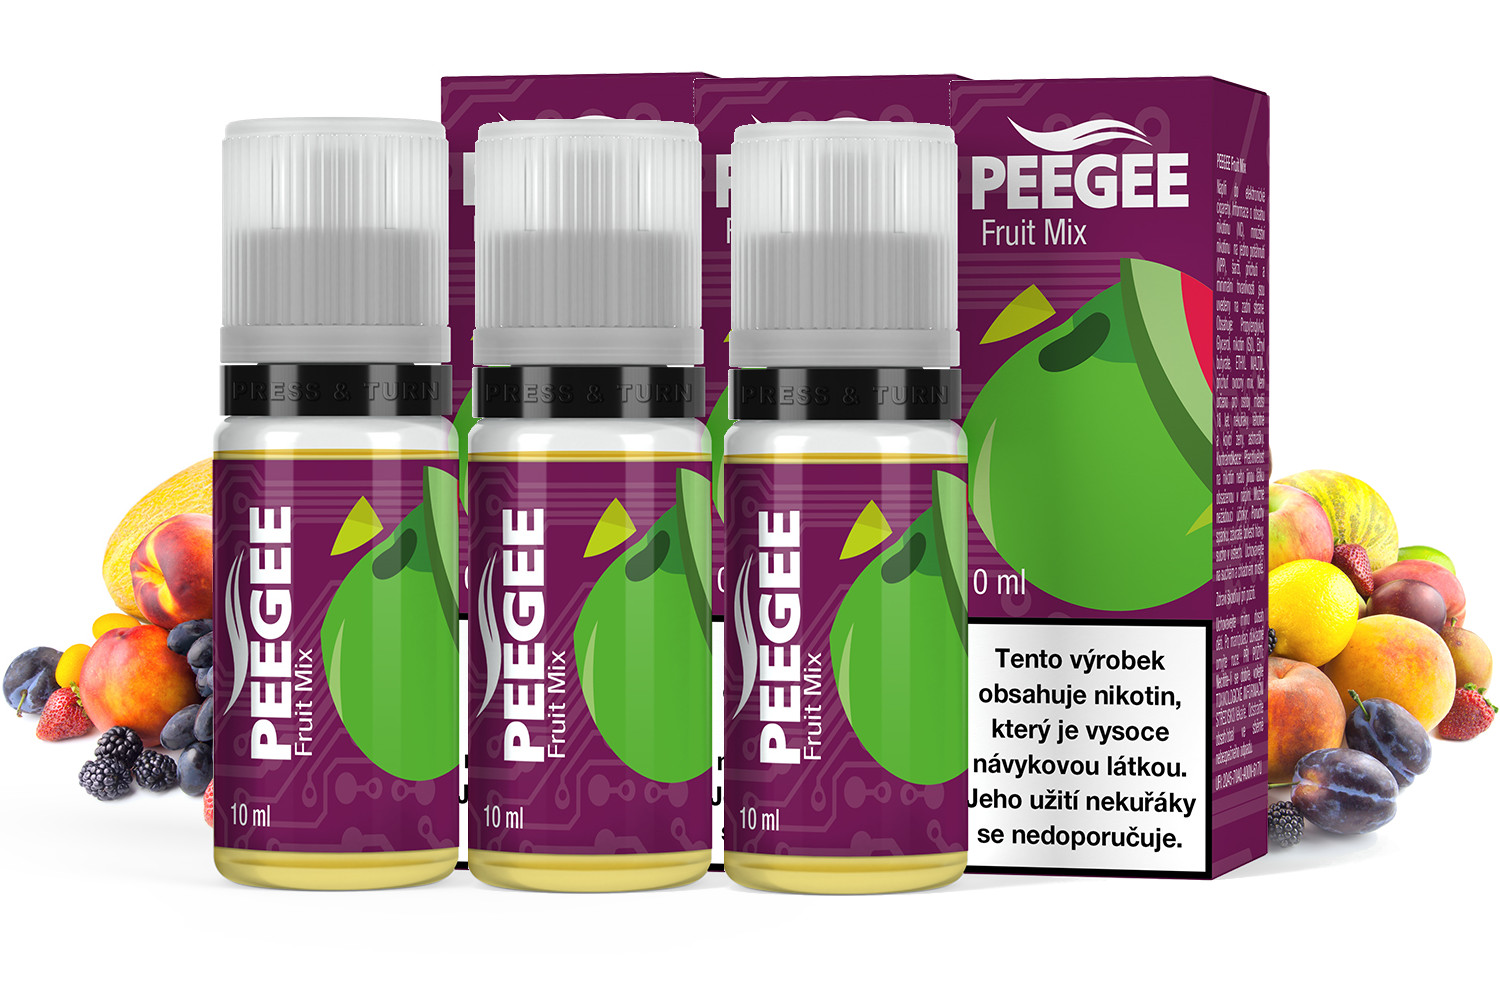 PEEGEE - Ovocná směs (Fruit Mix) 3x10ml Obsah nikotinu: 6mg